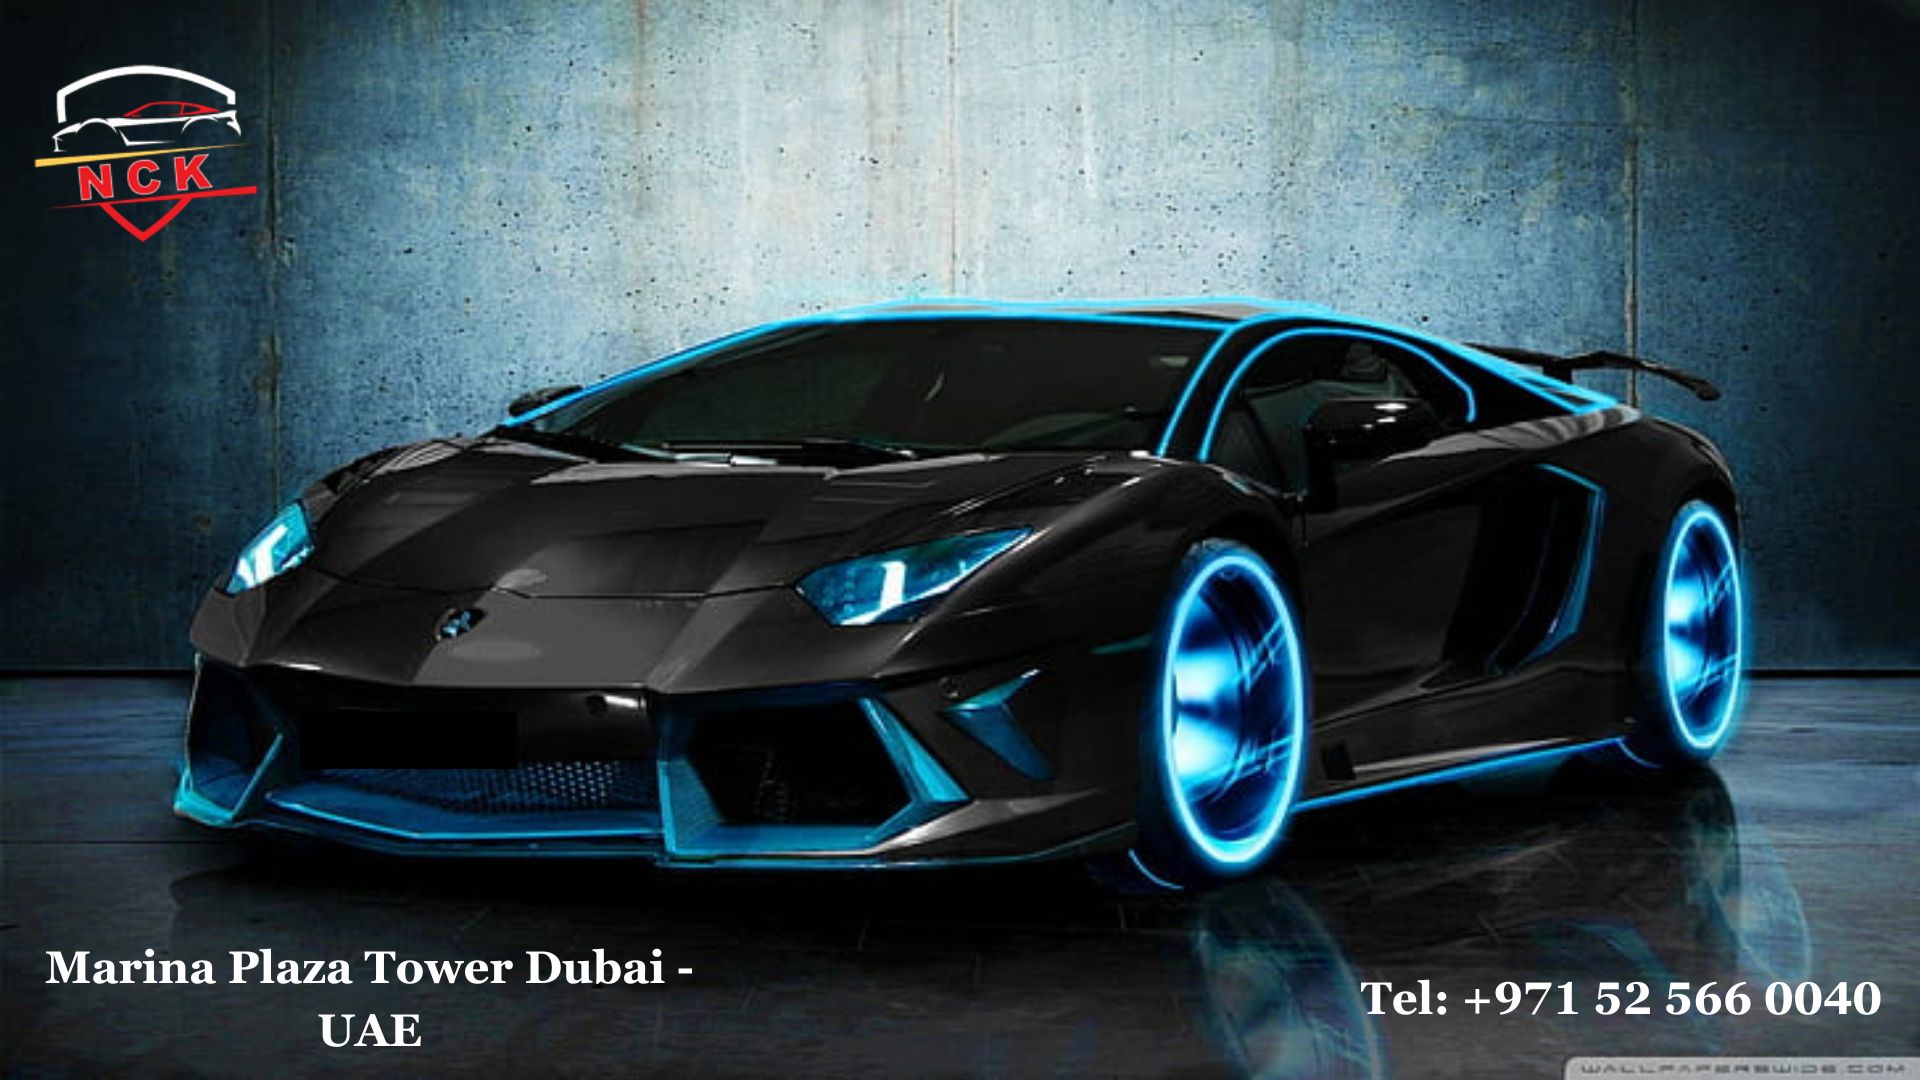 Renting a luxury car in Dubai